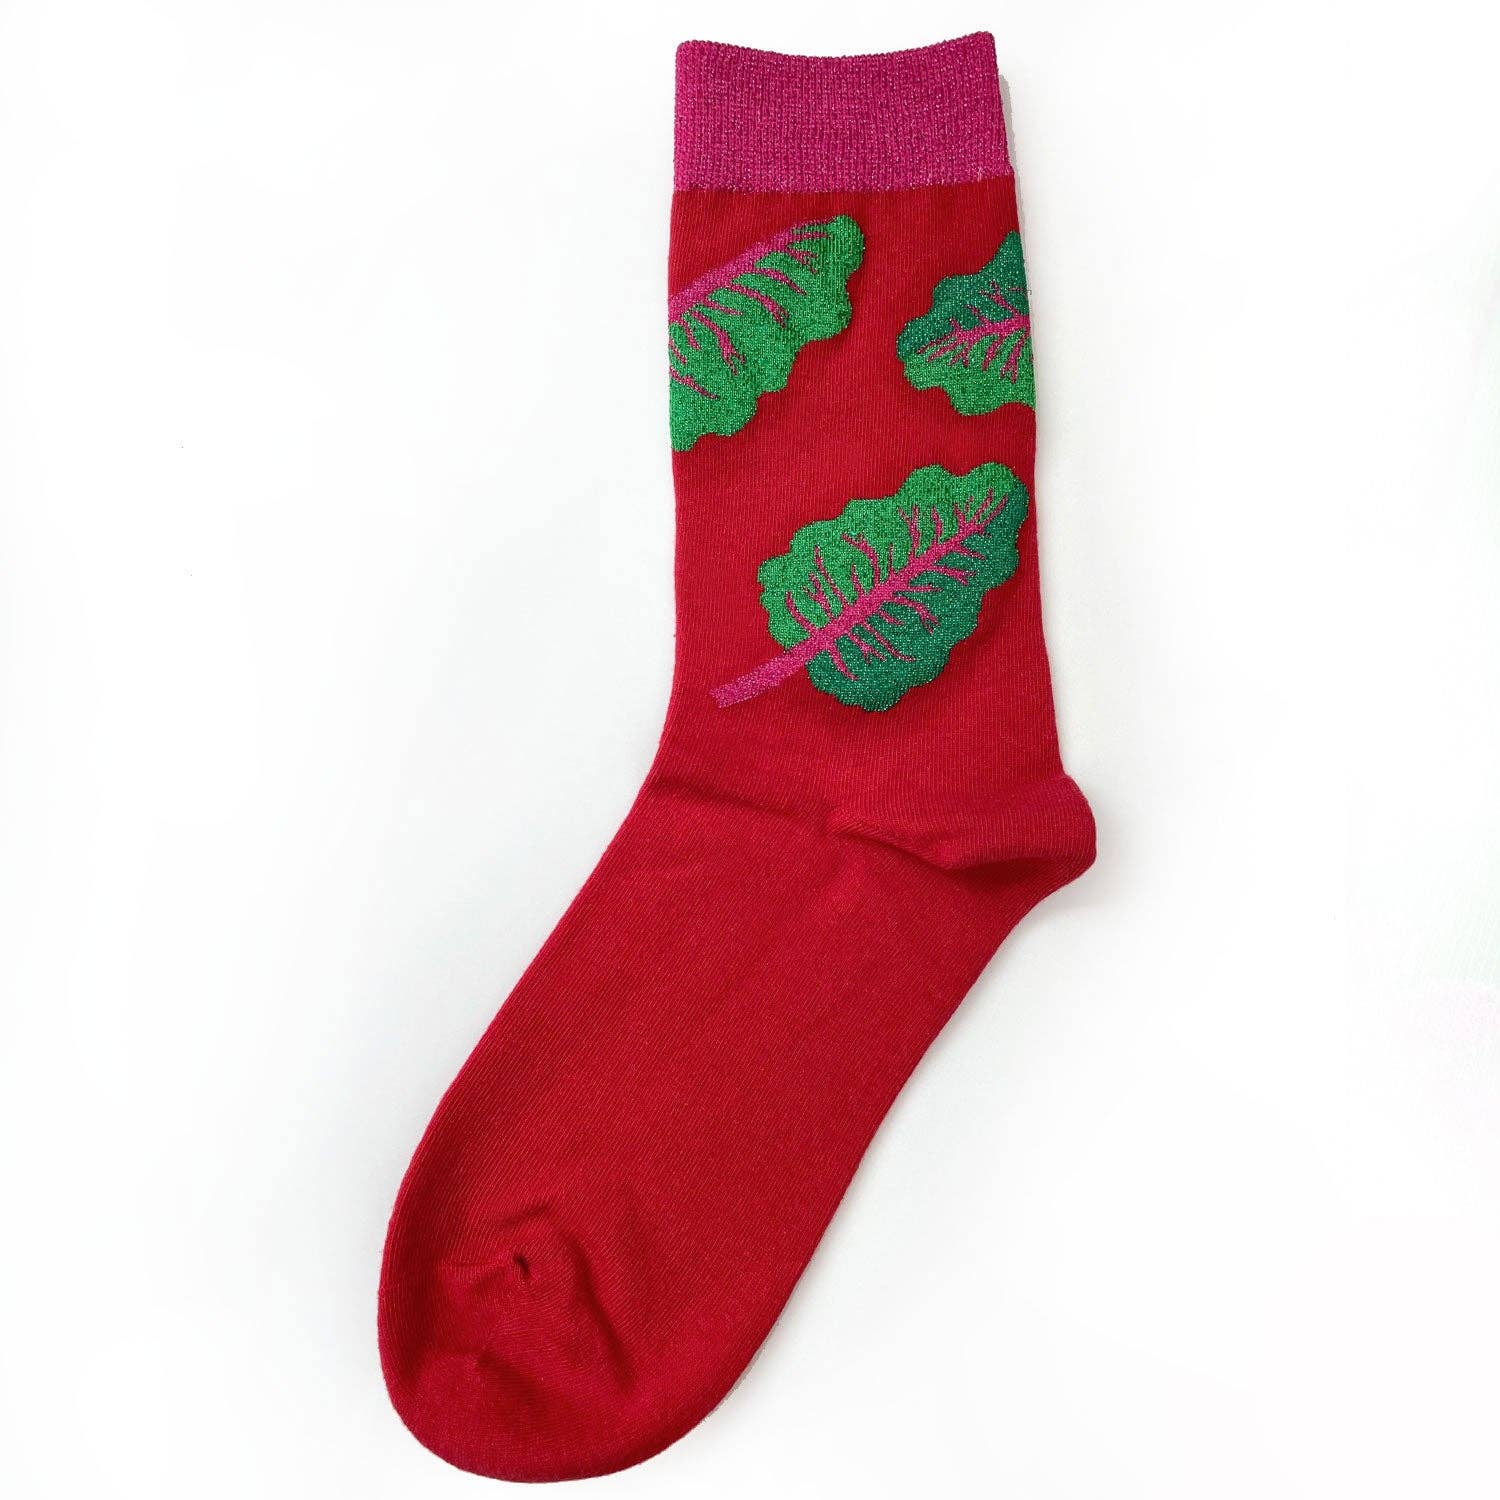 Dark red socks designed with glittery, green chard